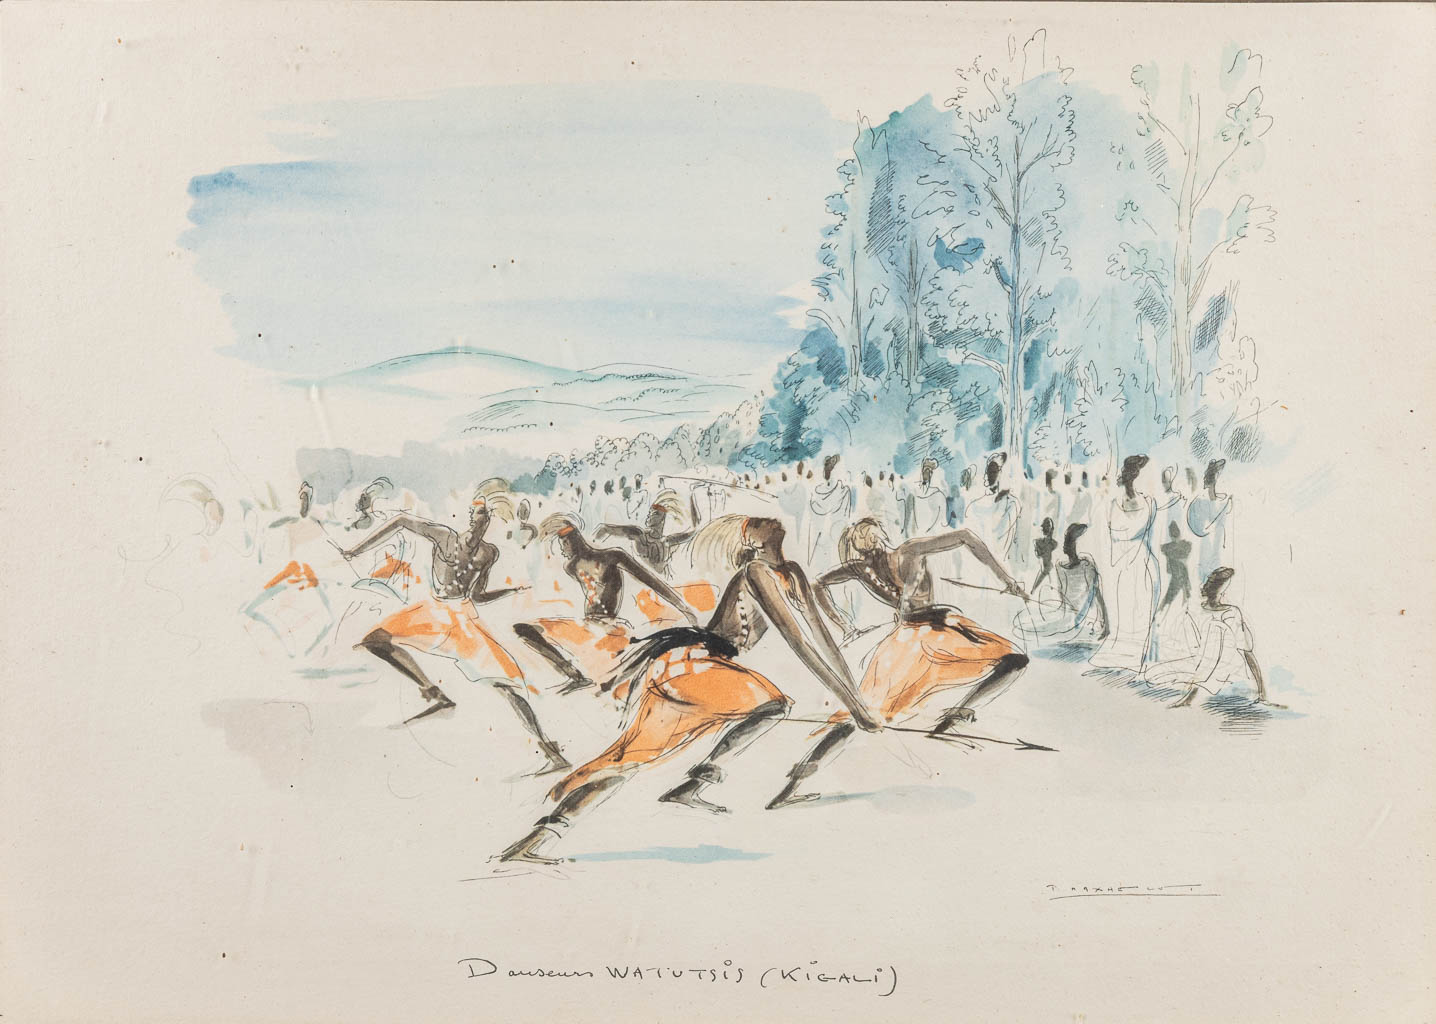 Paul DAXHELET (1905-1993) 'Danseurs Watutsis (Kigali)', Aquarel op papier. (35 x 25 cm)